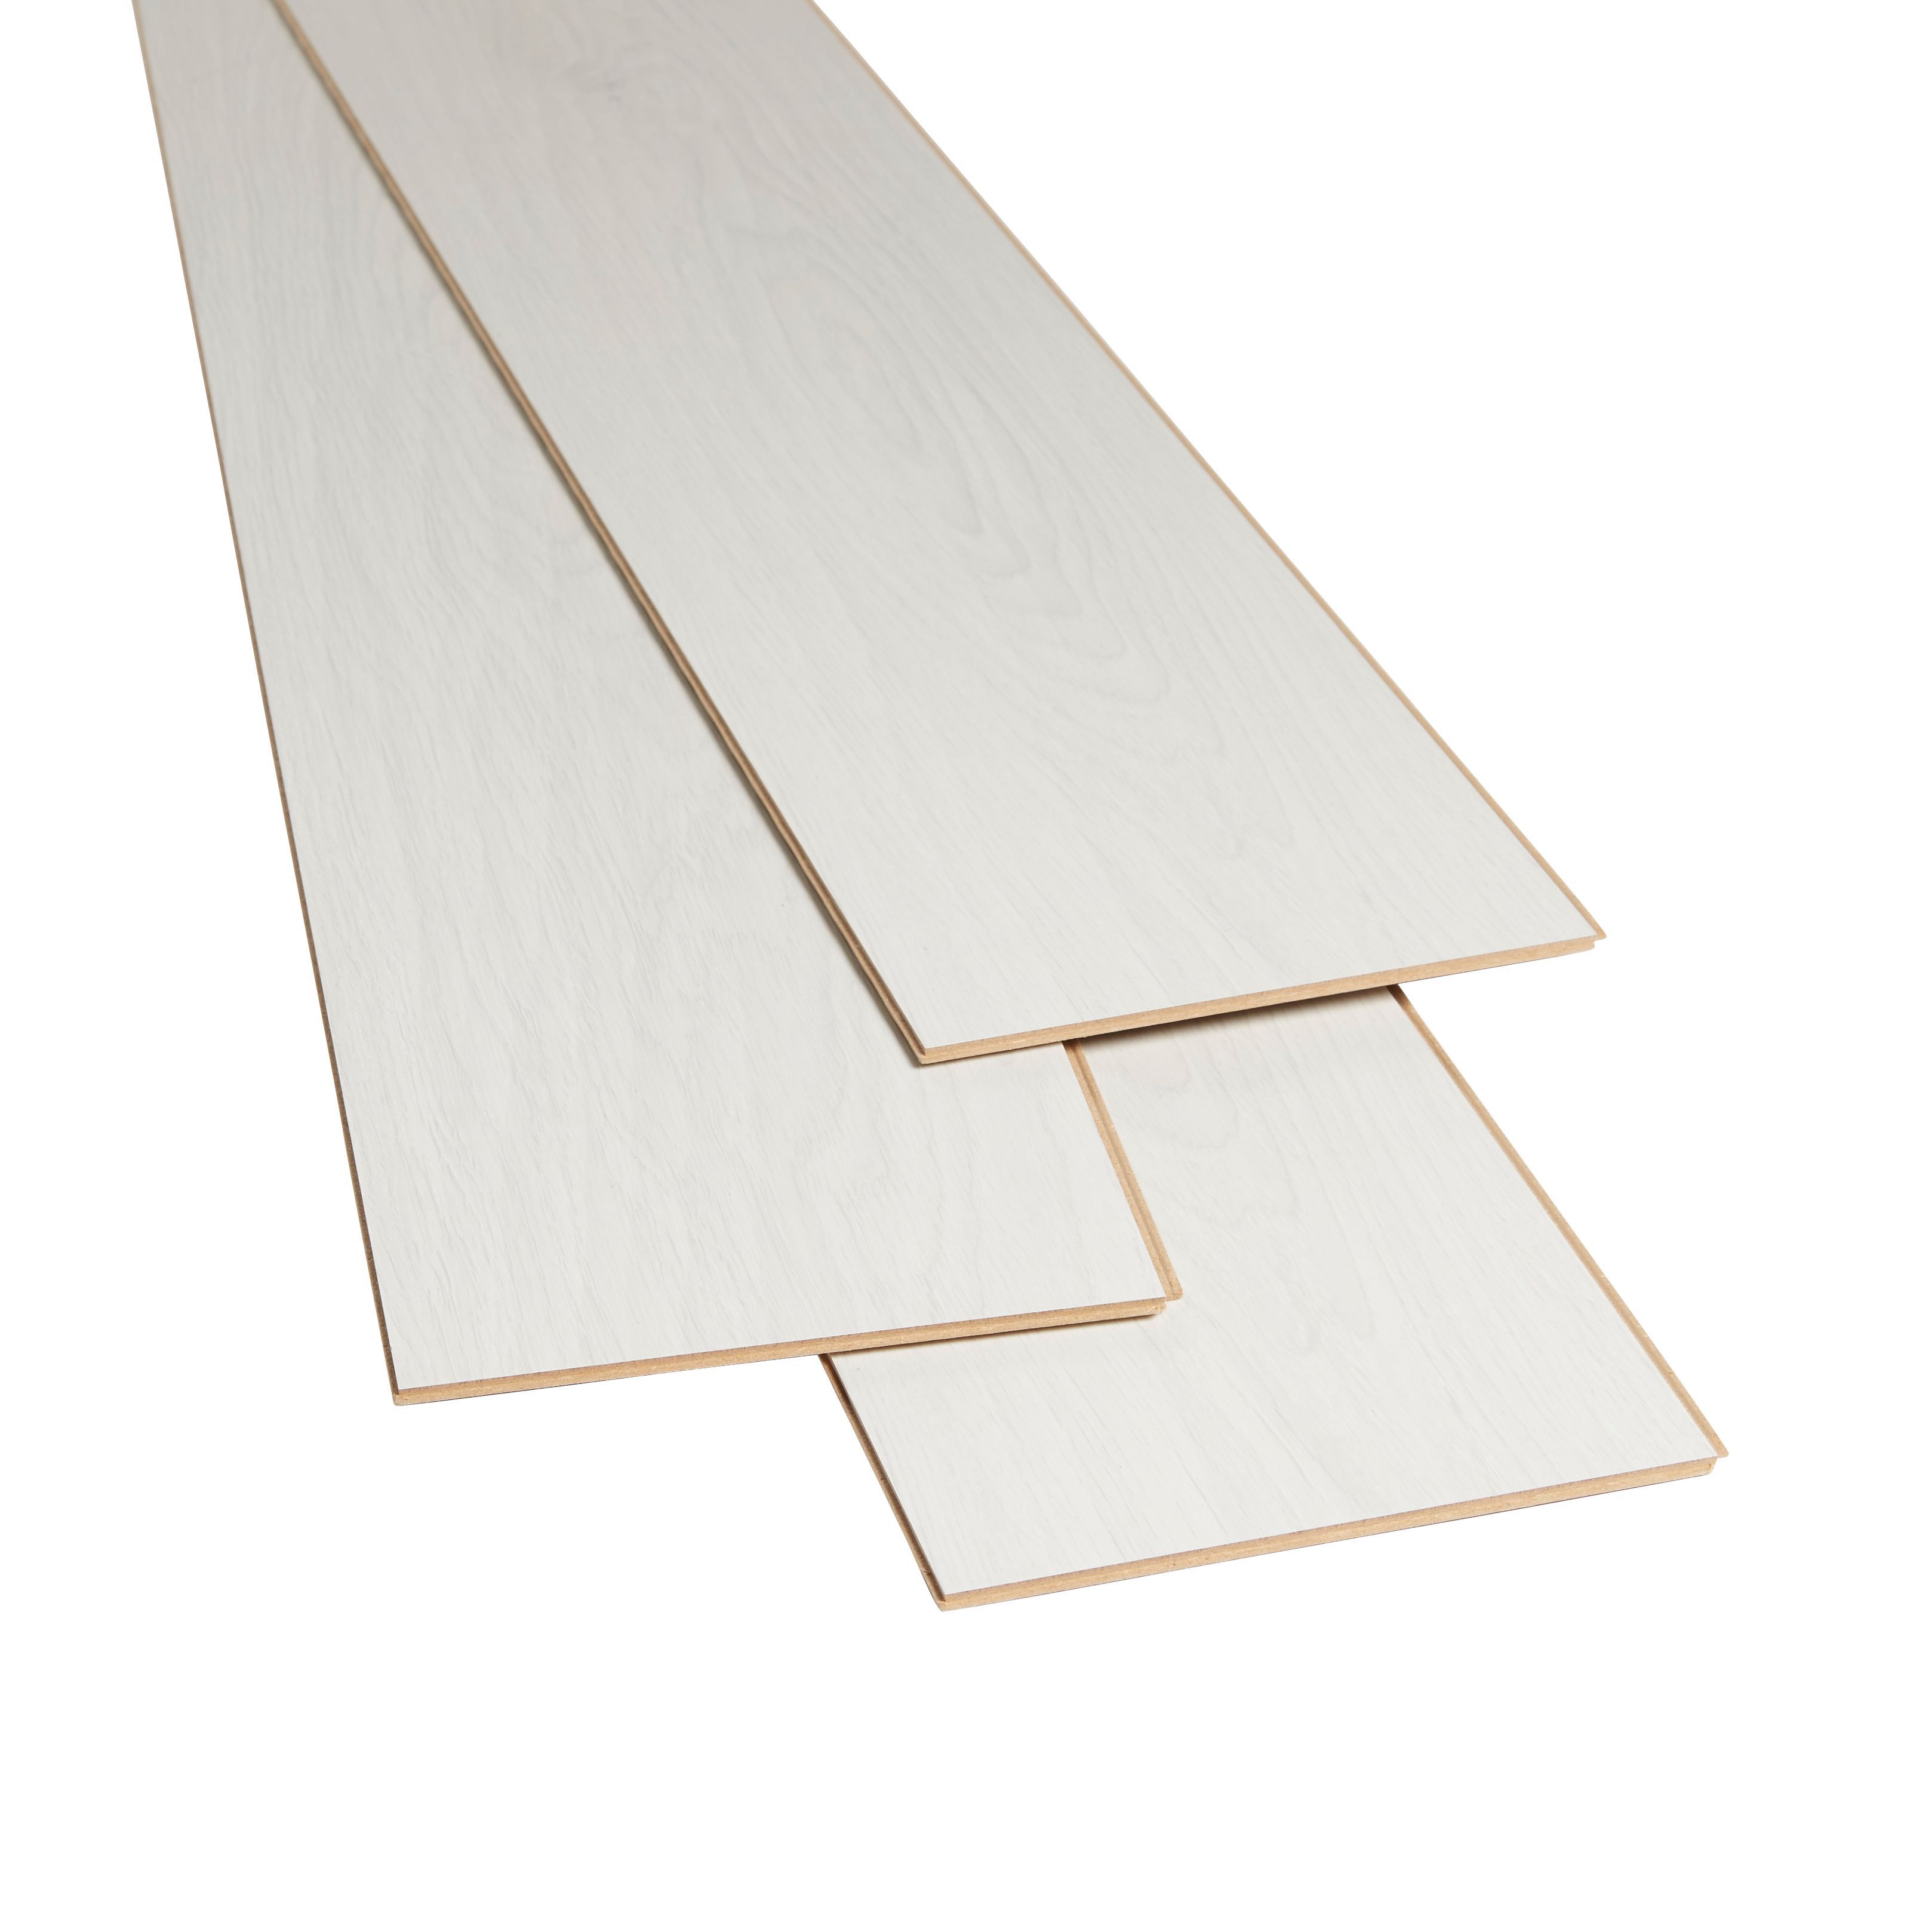 Ballarat White Gloss Oak effect Laminate Flooring Sample